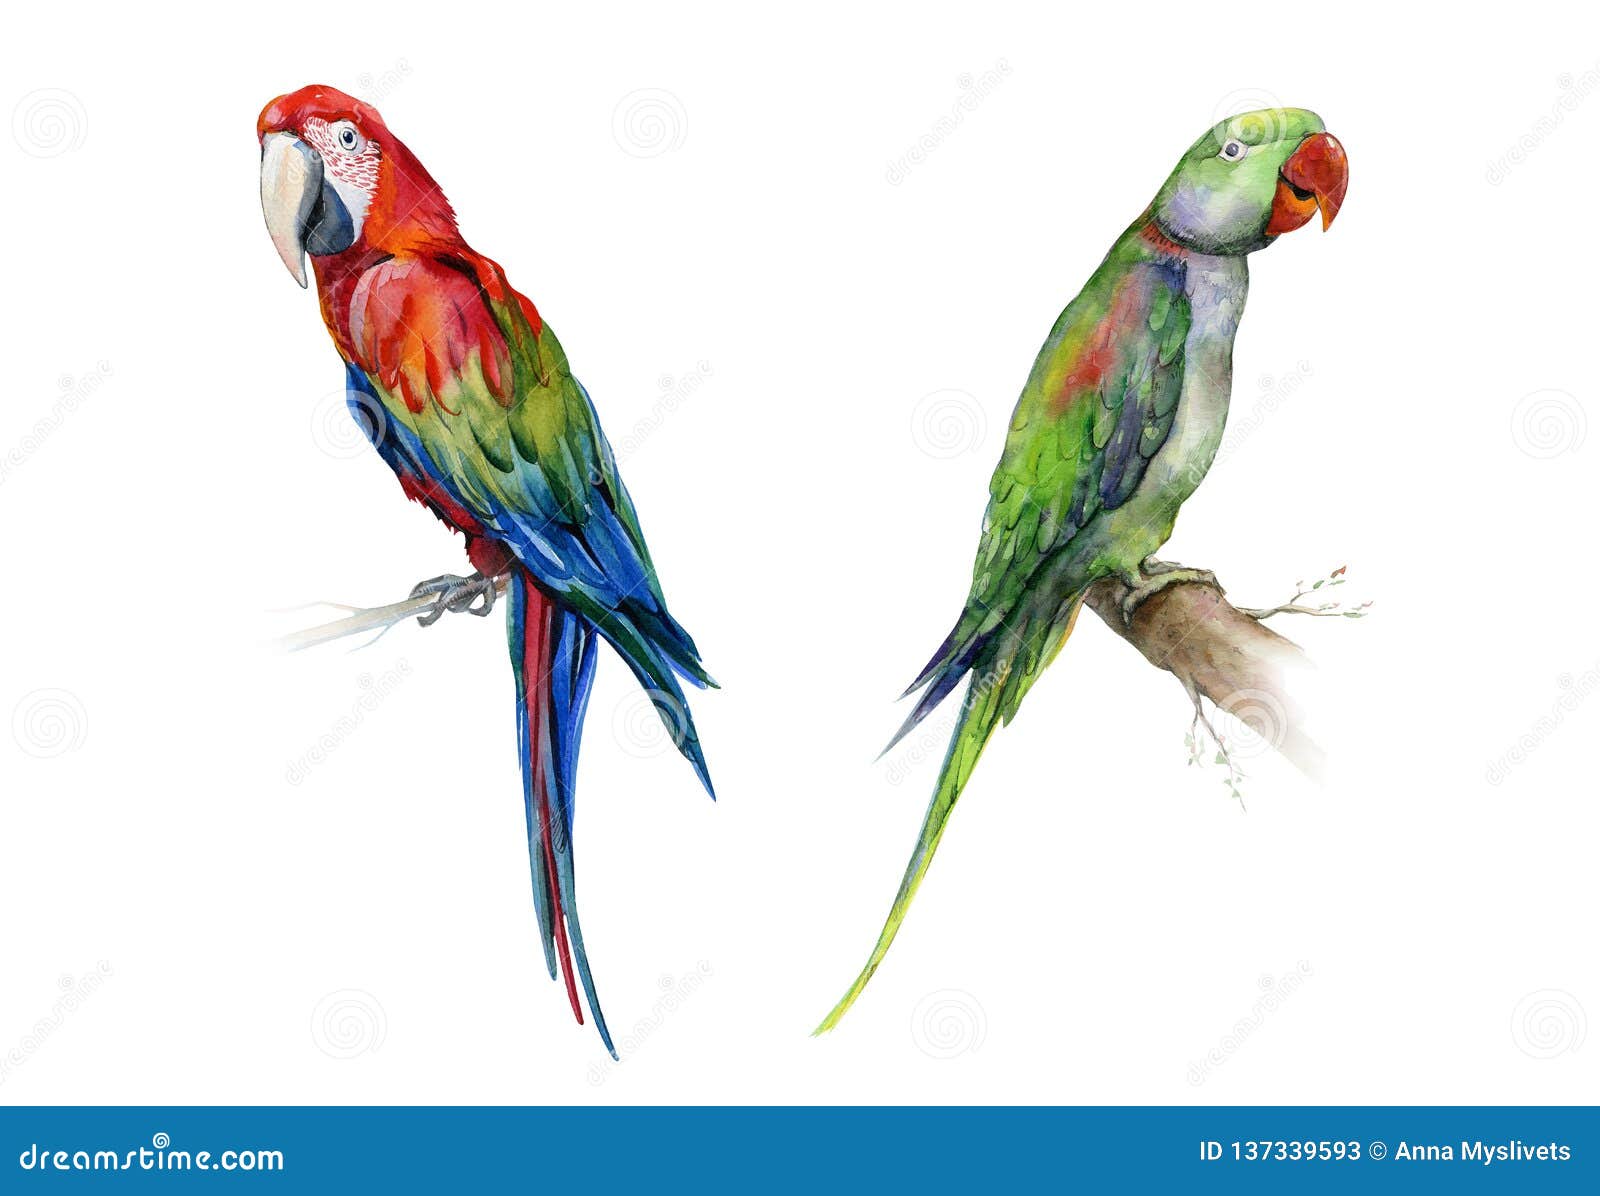 Mand cilia Himlen Scarlet Macaw Parrot and Green Alexandrine Parrot. Stock Illustration -  Illustration of portrait, bird: 137339593